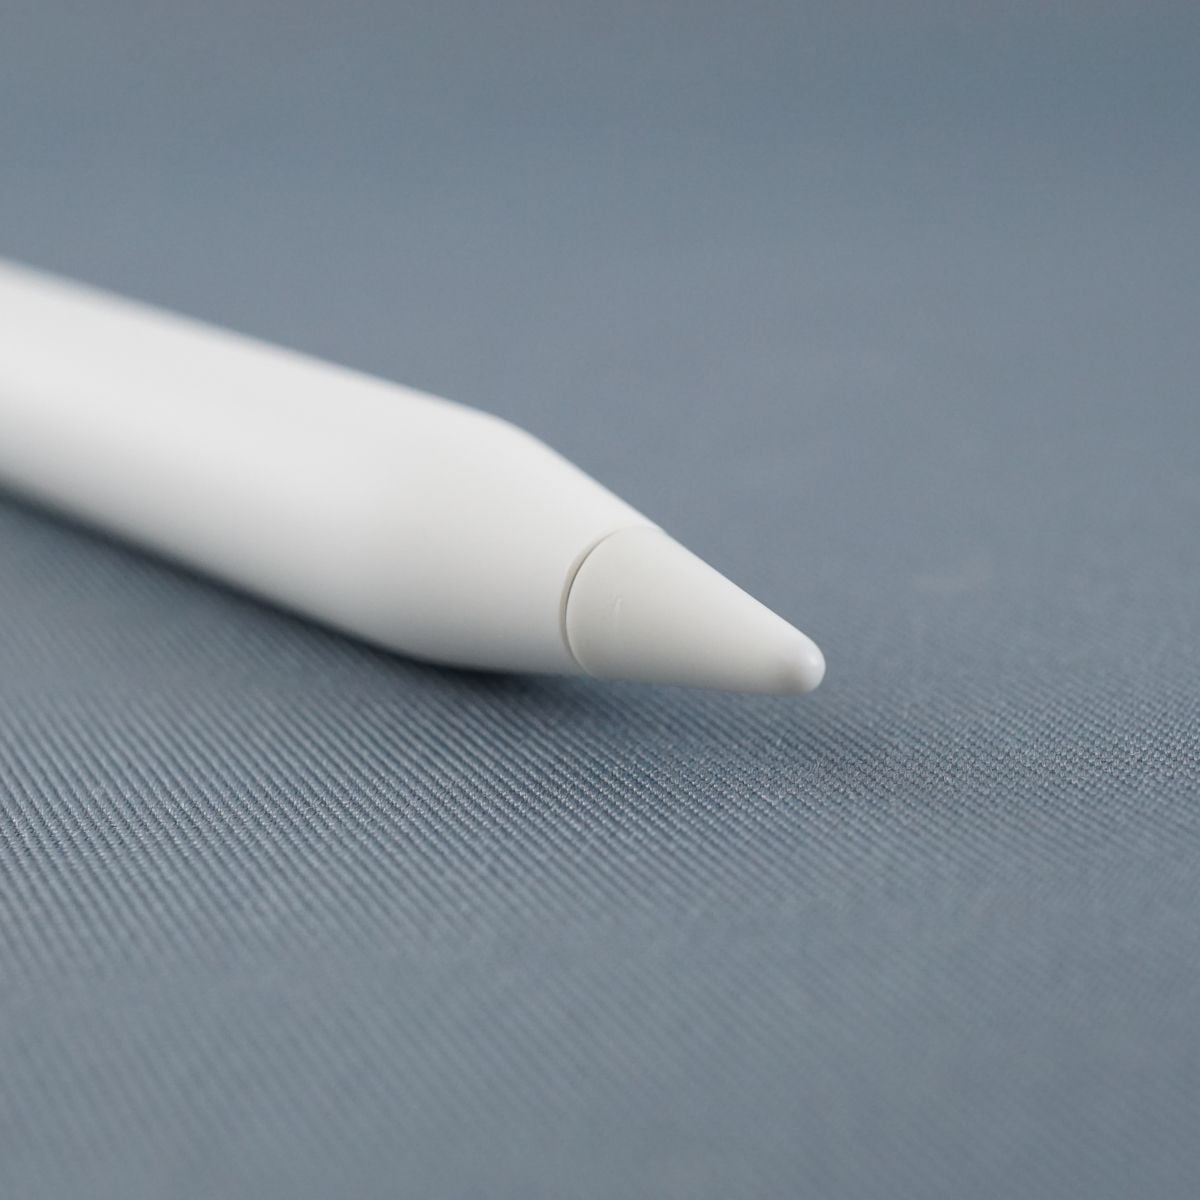 Apple Pencil USED超美品 本体のみ 第二世代 MU8F2JA タッチペン アップルペンシル iPad Pro用 完動品 即日発送 KR  中古 V9167